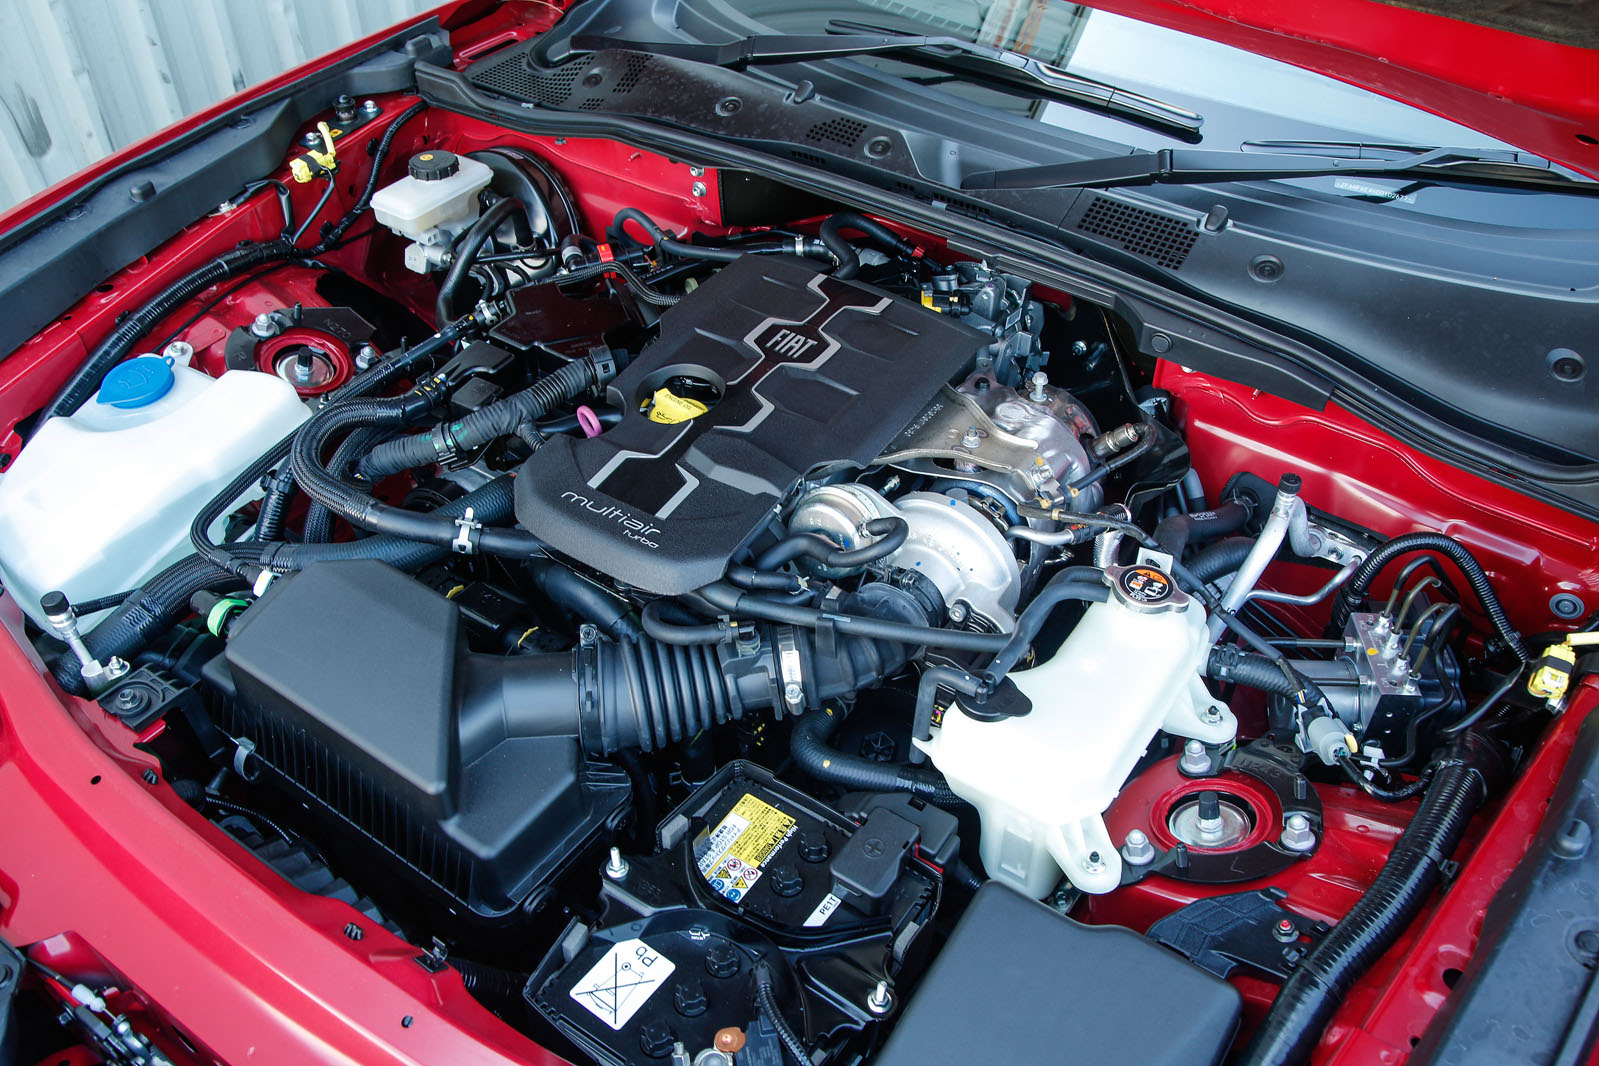 2.0-litre Fiat Spider petrol engine